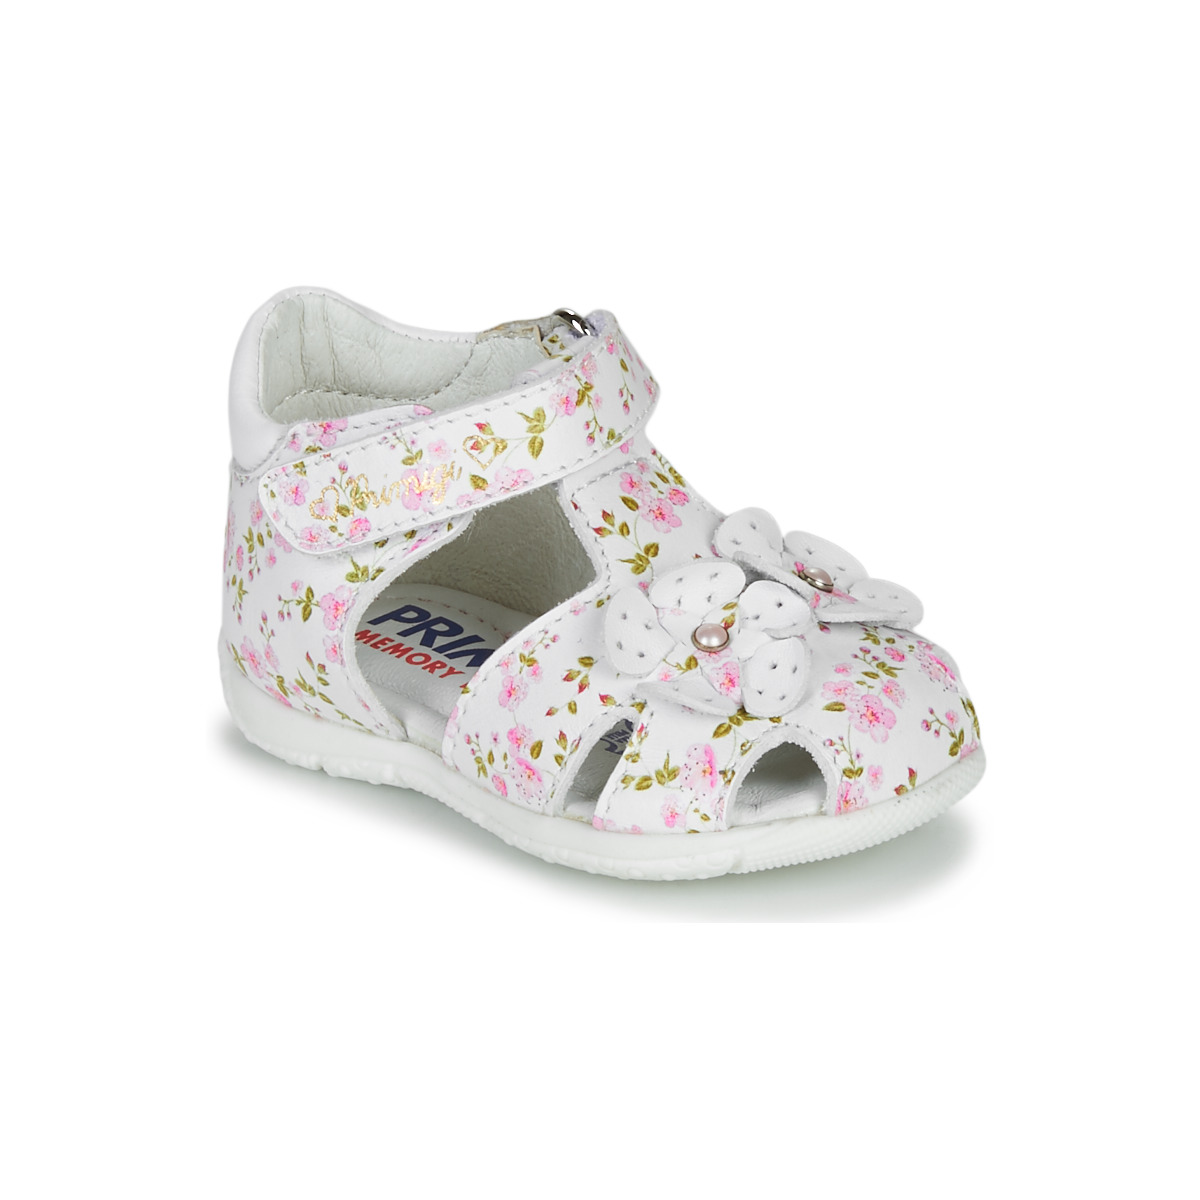 Chaussures Fille Sandales et Nu-pieds Primigi 5401300 Blanc / Rose